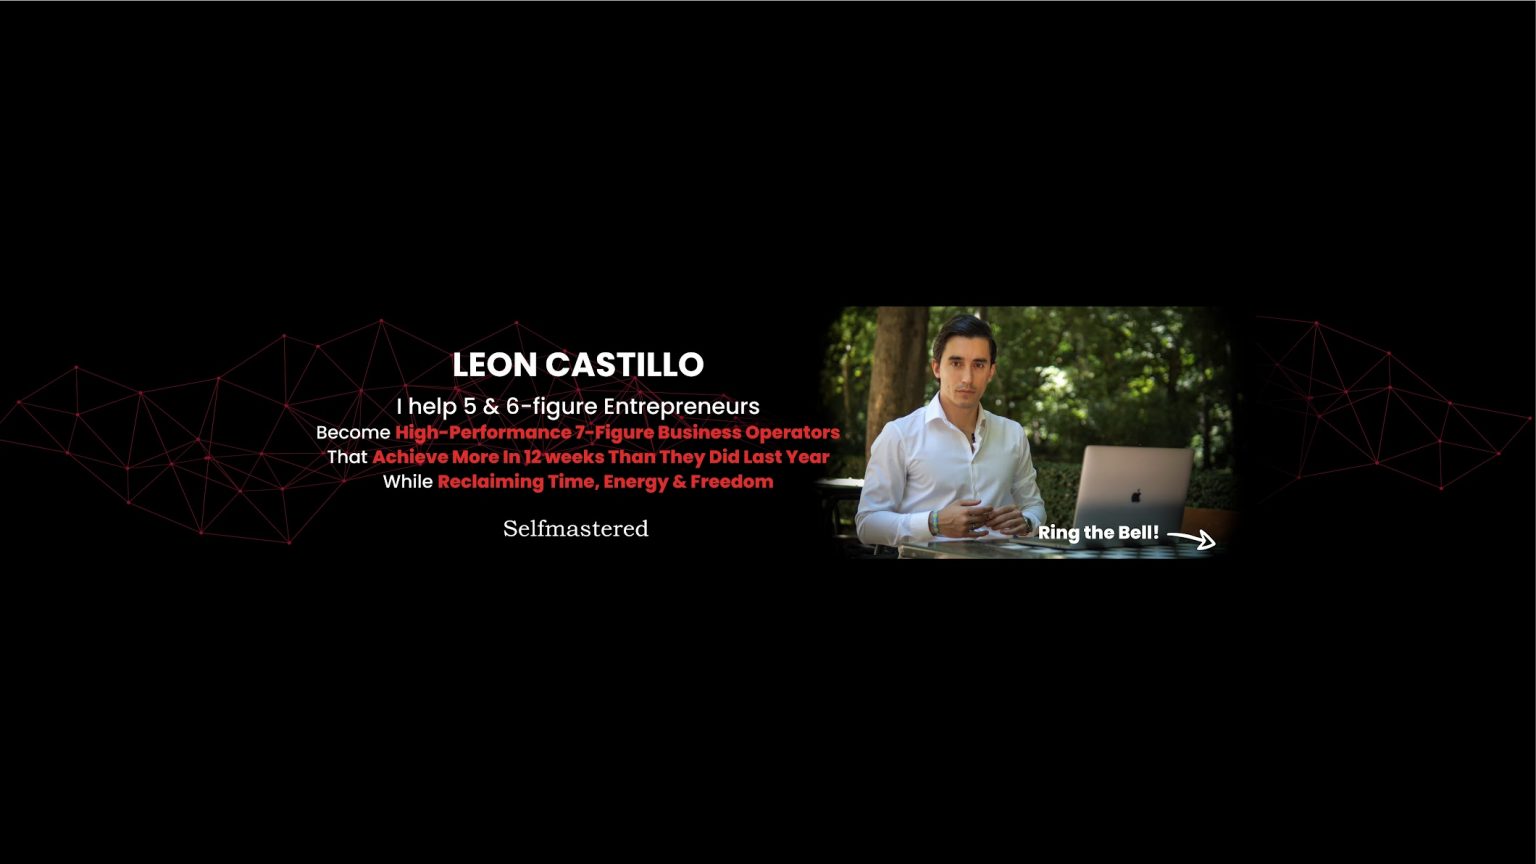 Leon Castillo – Selfmastered Evolution 3.0